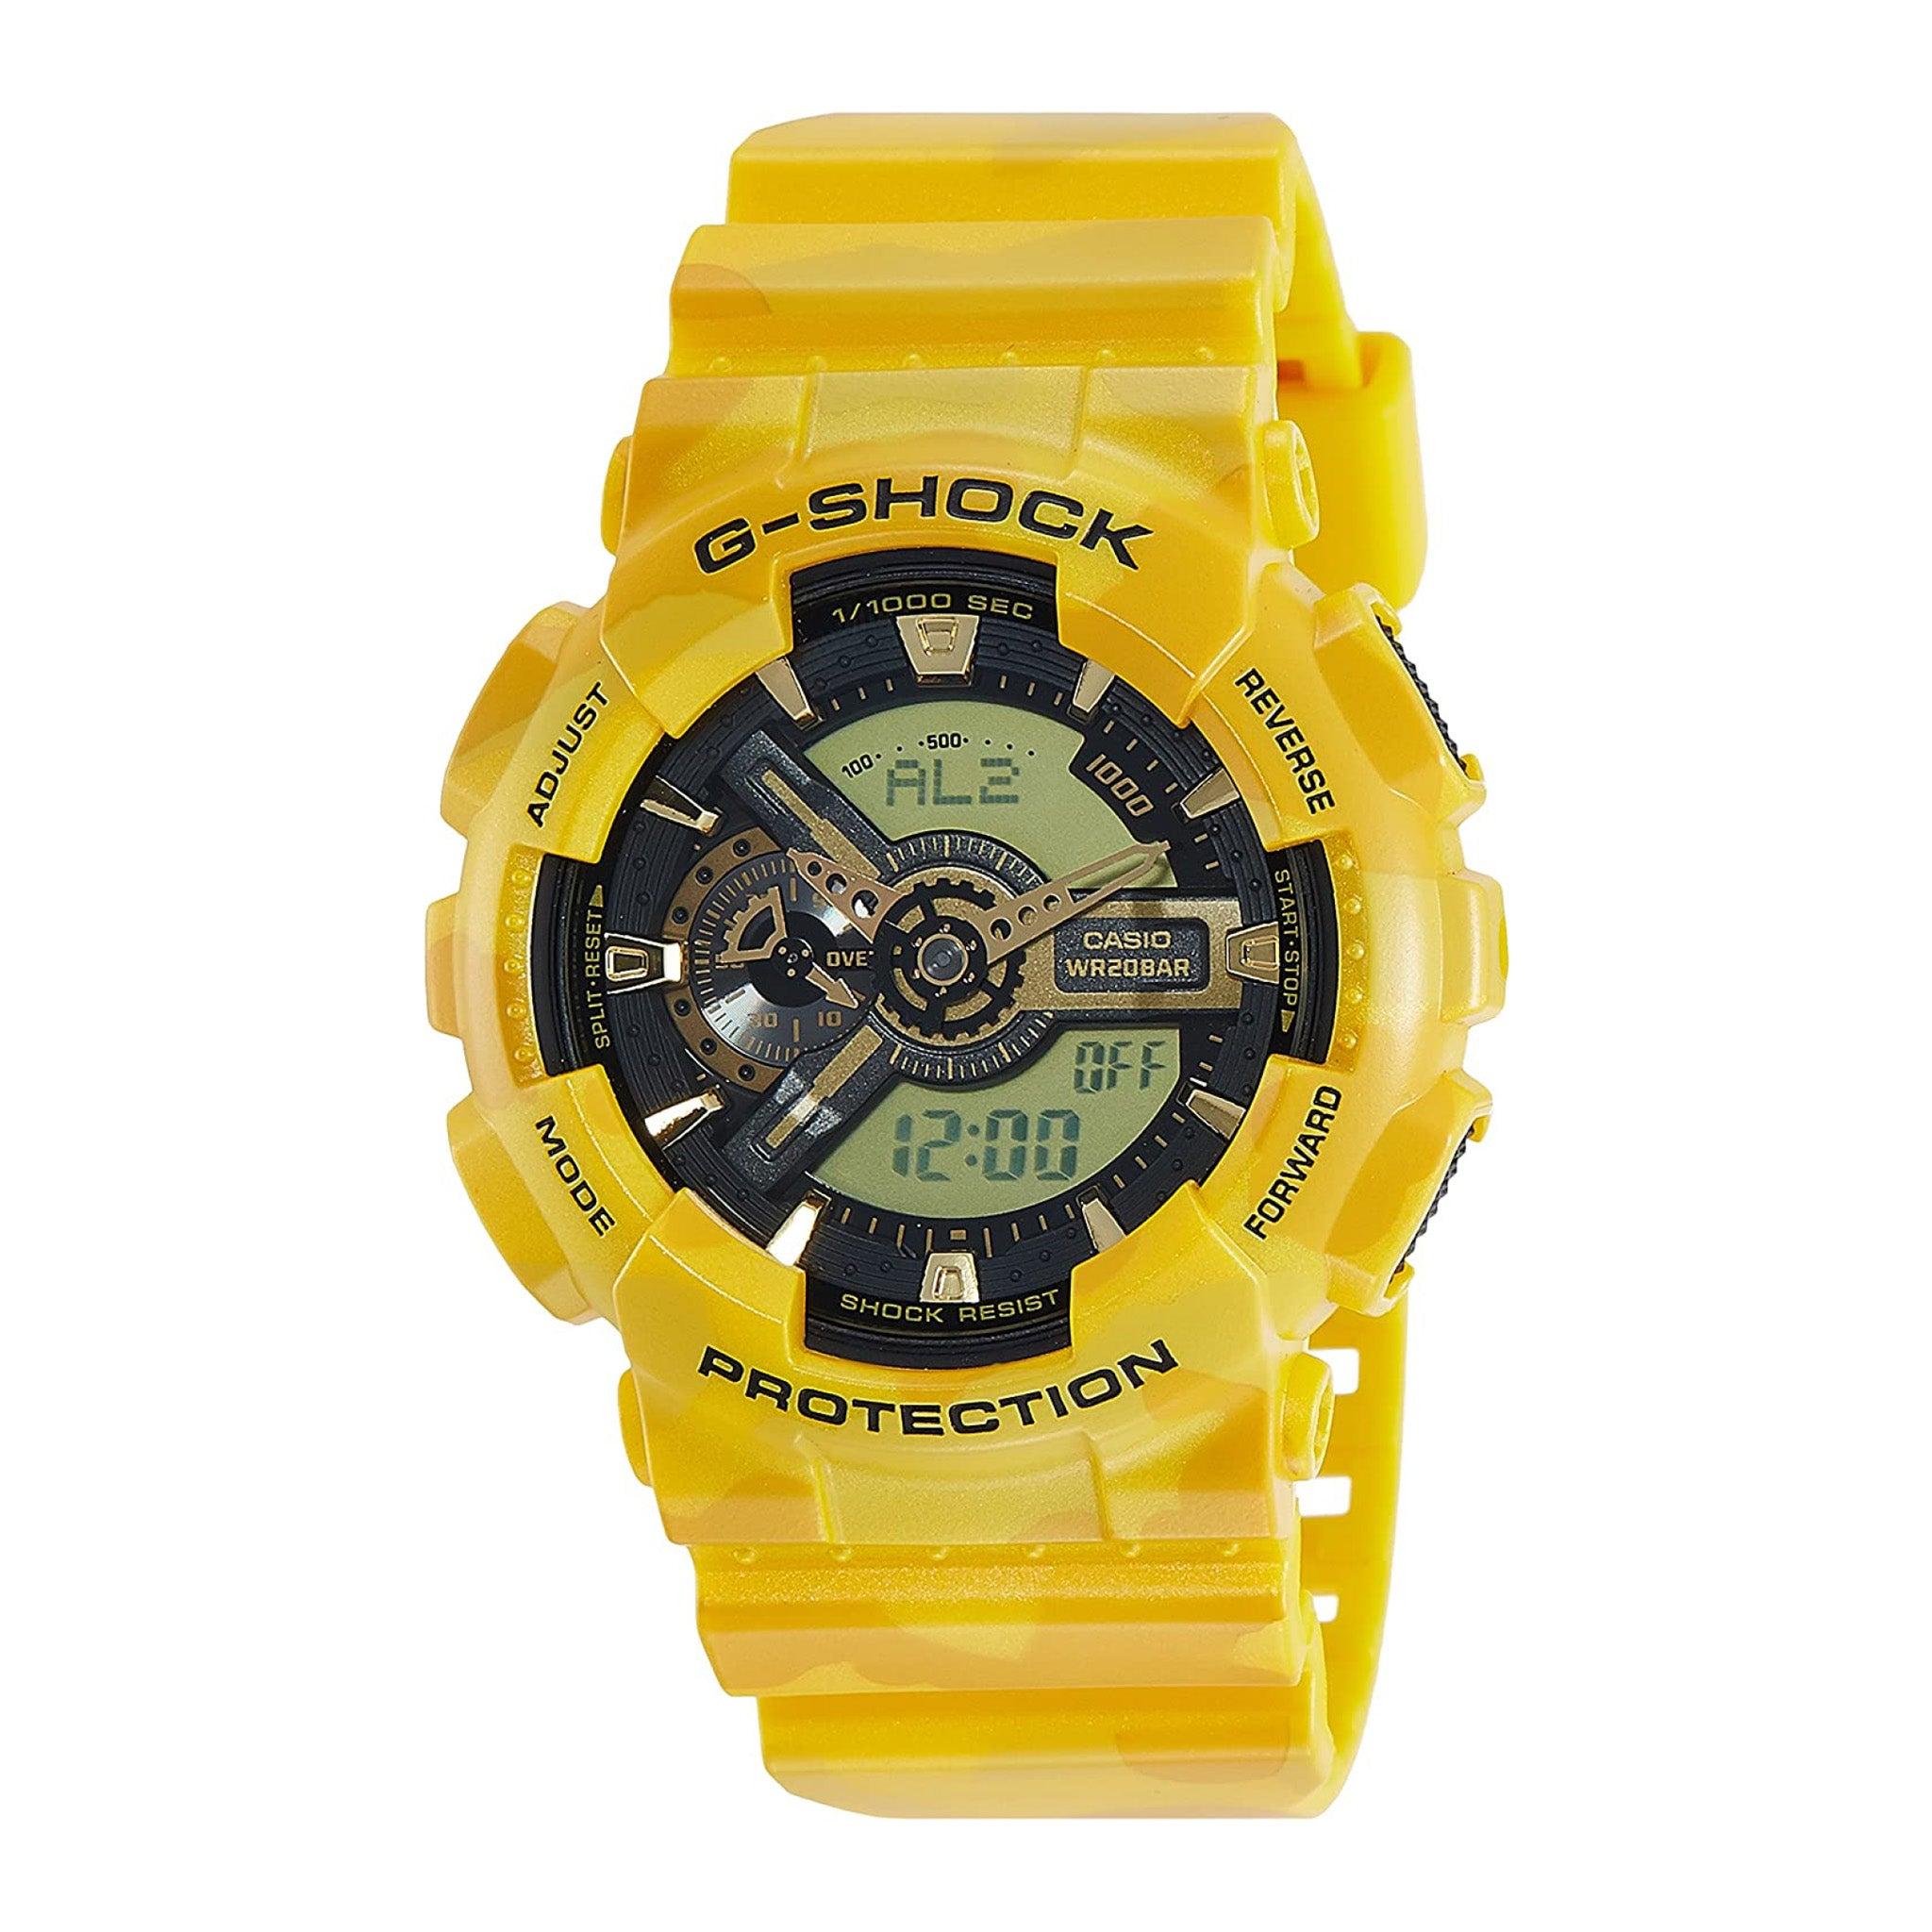 Casio G-Shock Men's Black Ana-Digi Dial Resin Band Watch - Ga-110cm-9a